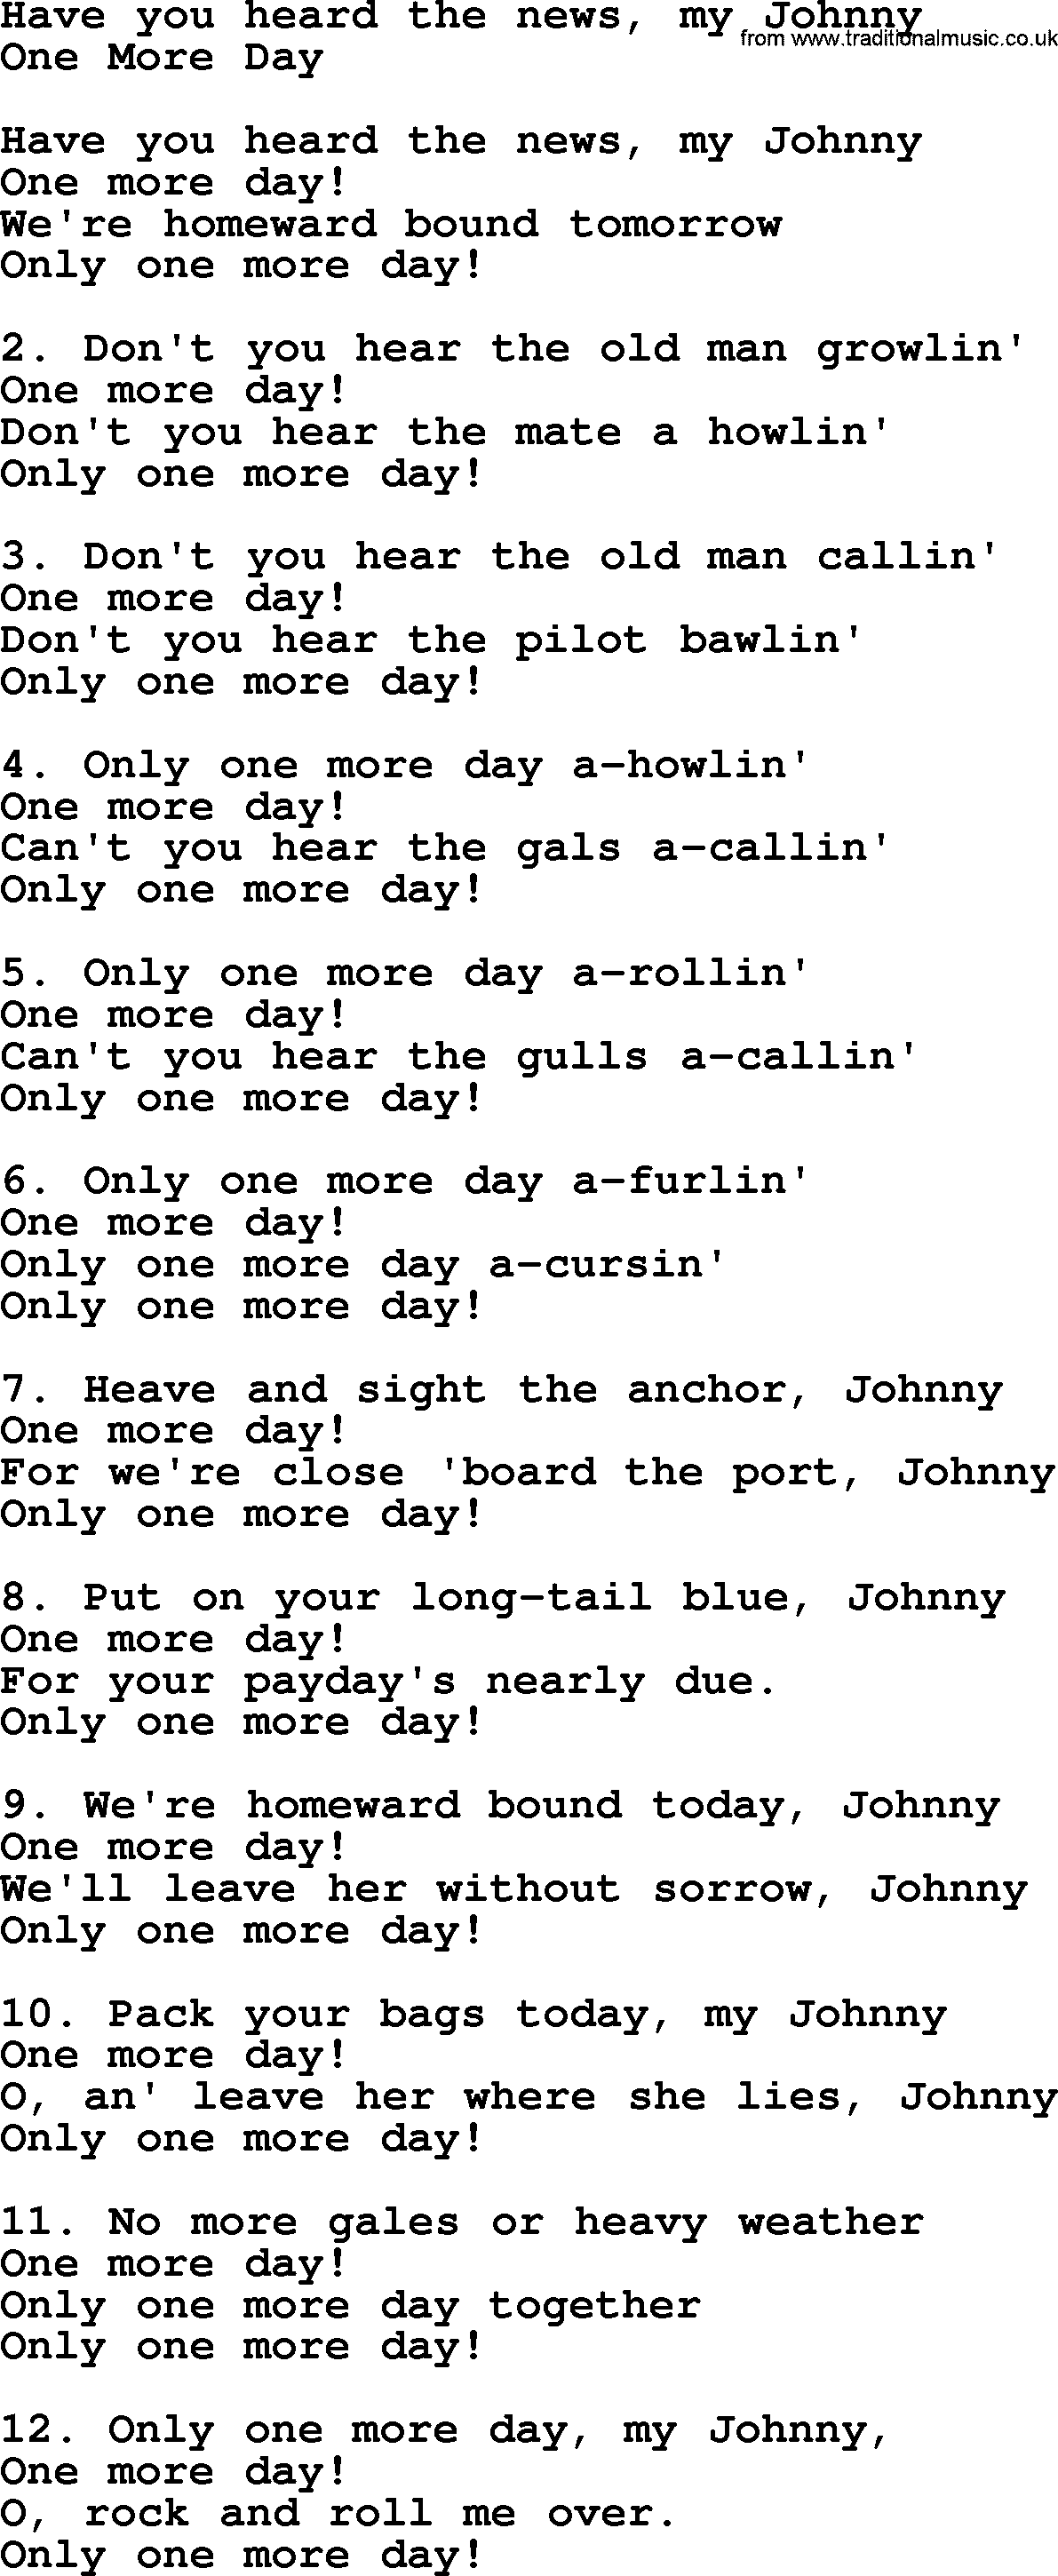 Sea Song or Shantie: Have You Heard The News My Johnny, lyrics